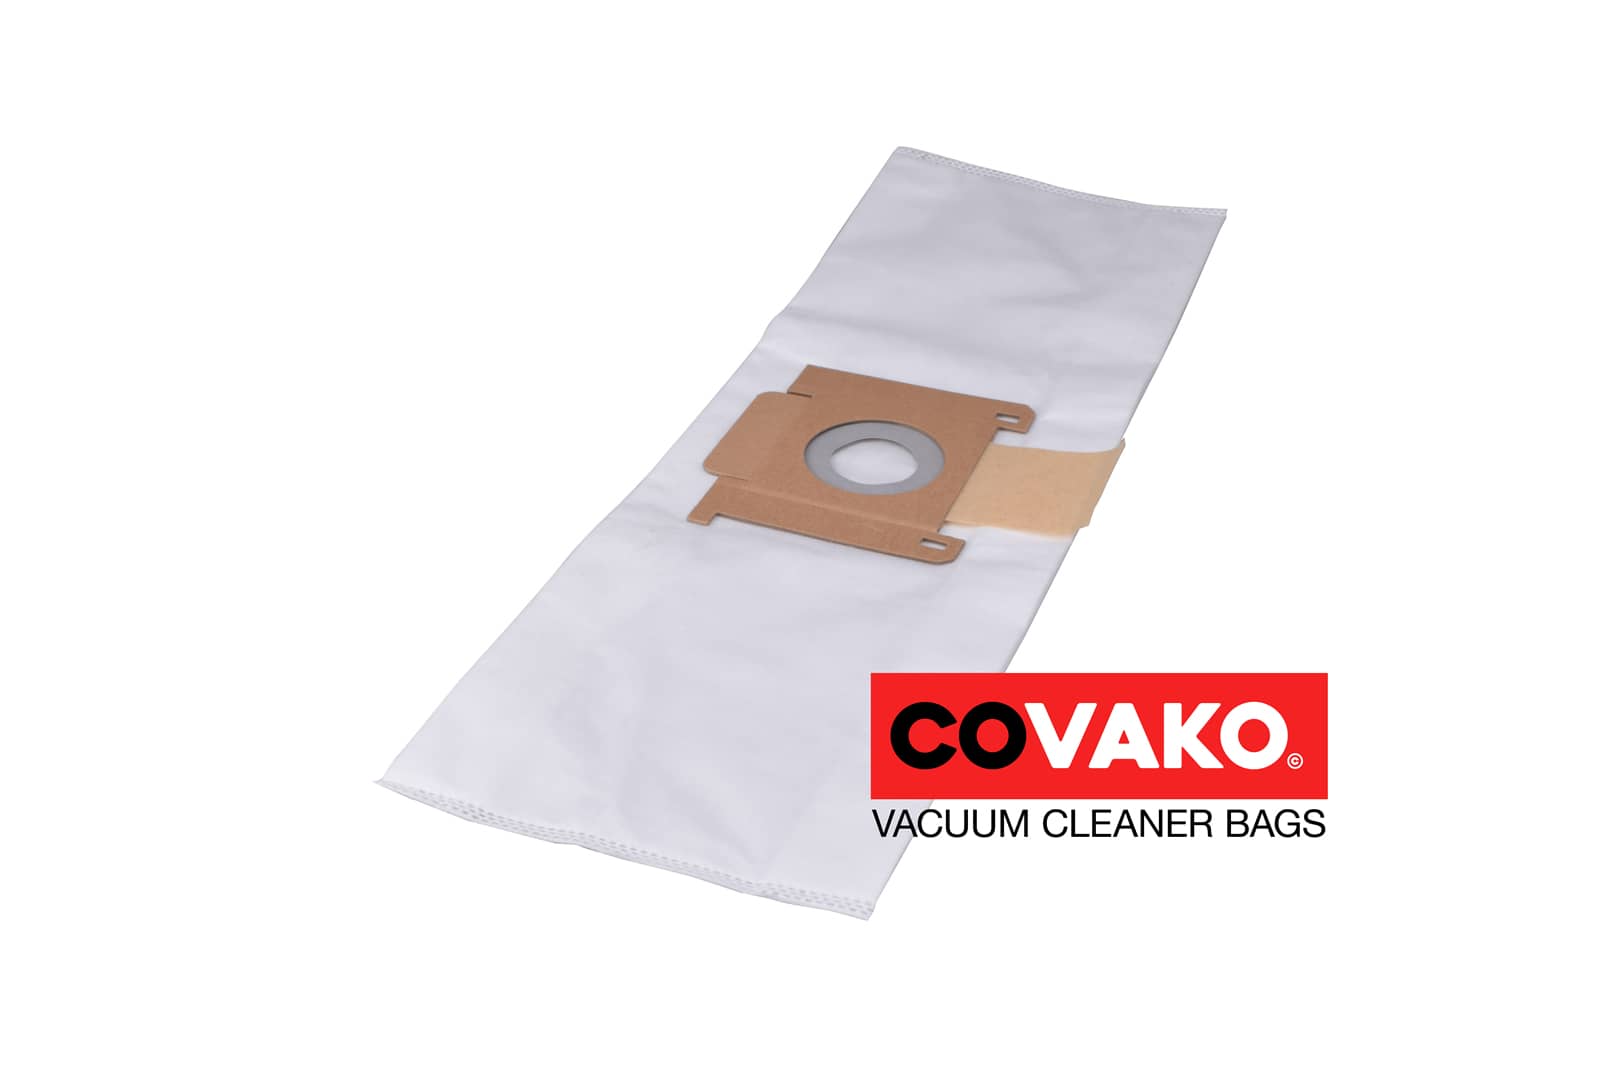 Clean a la Card K100220094830 / Synthesis - Clean a la Card vacuum cleaner bags